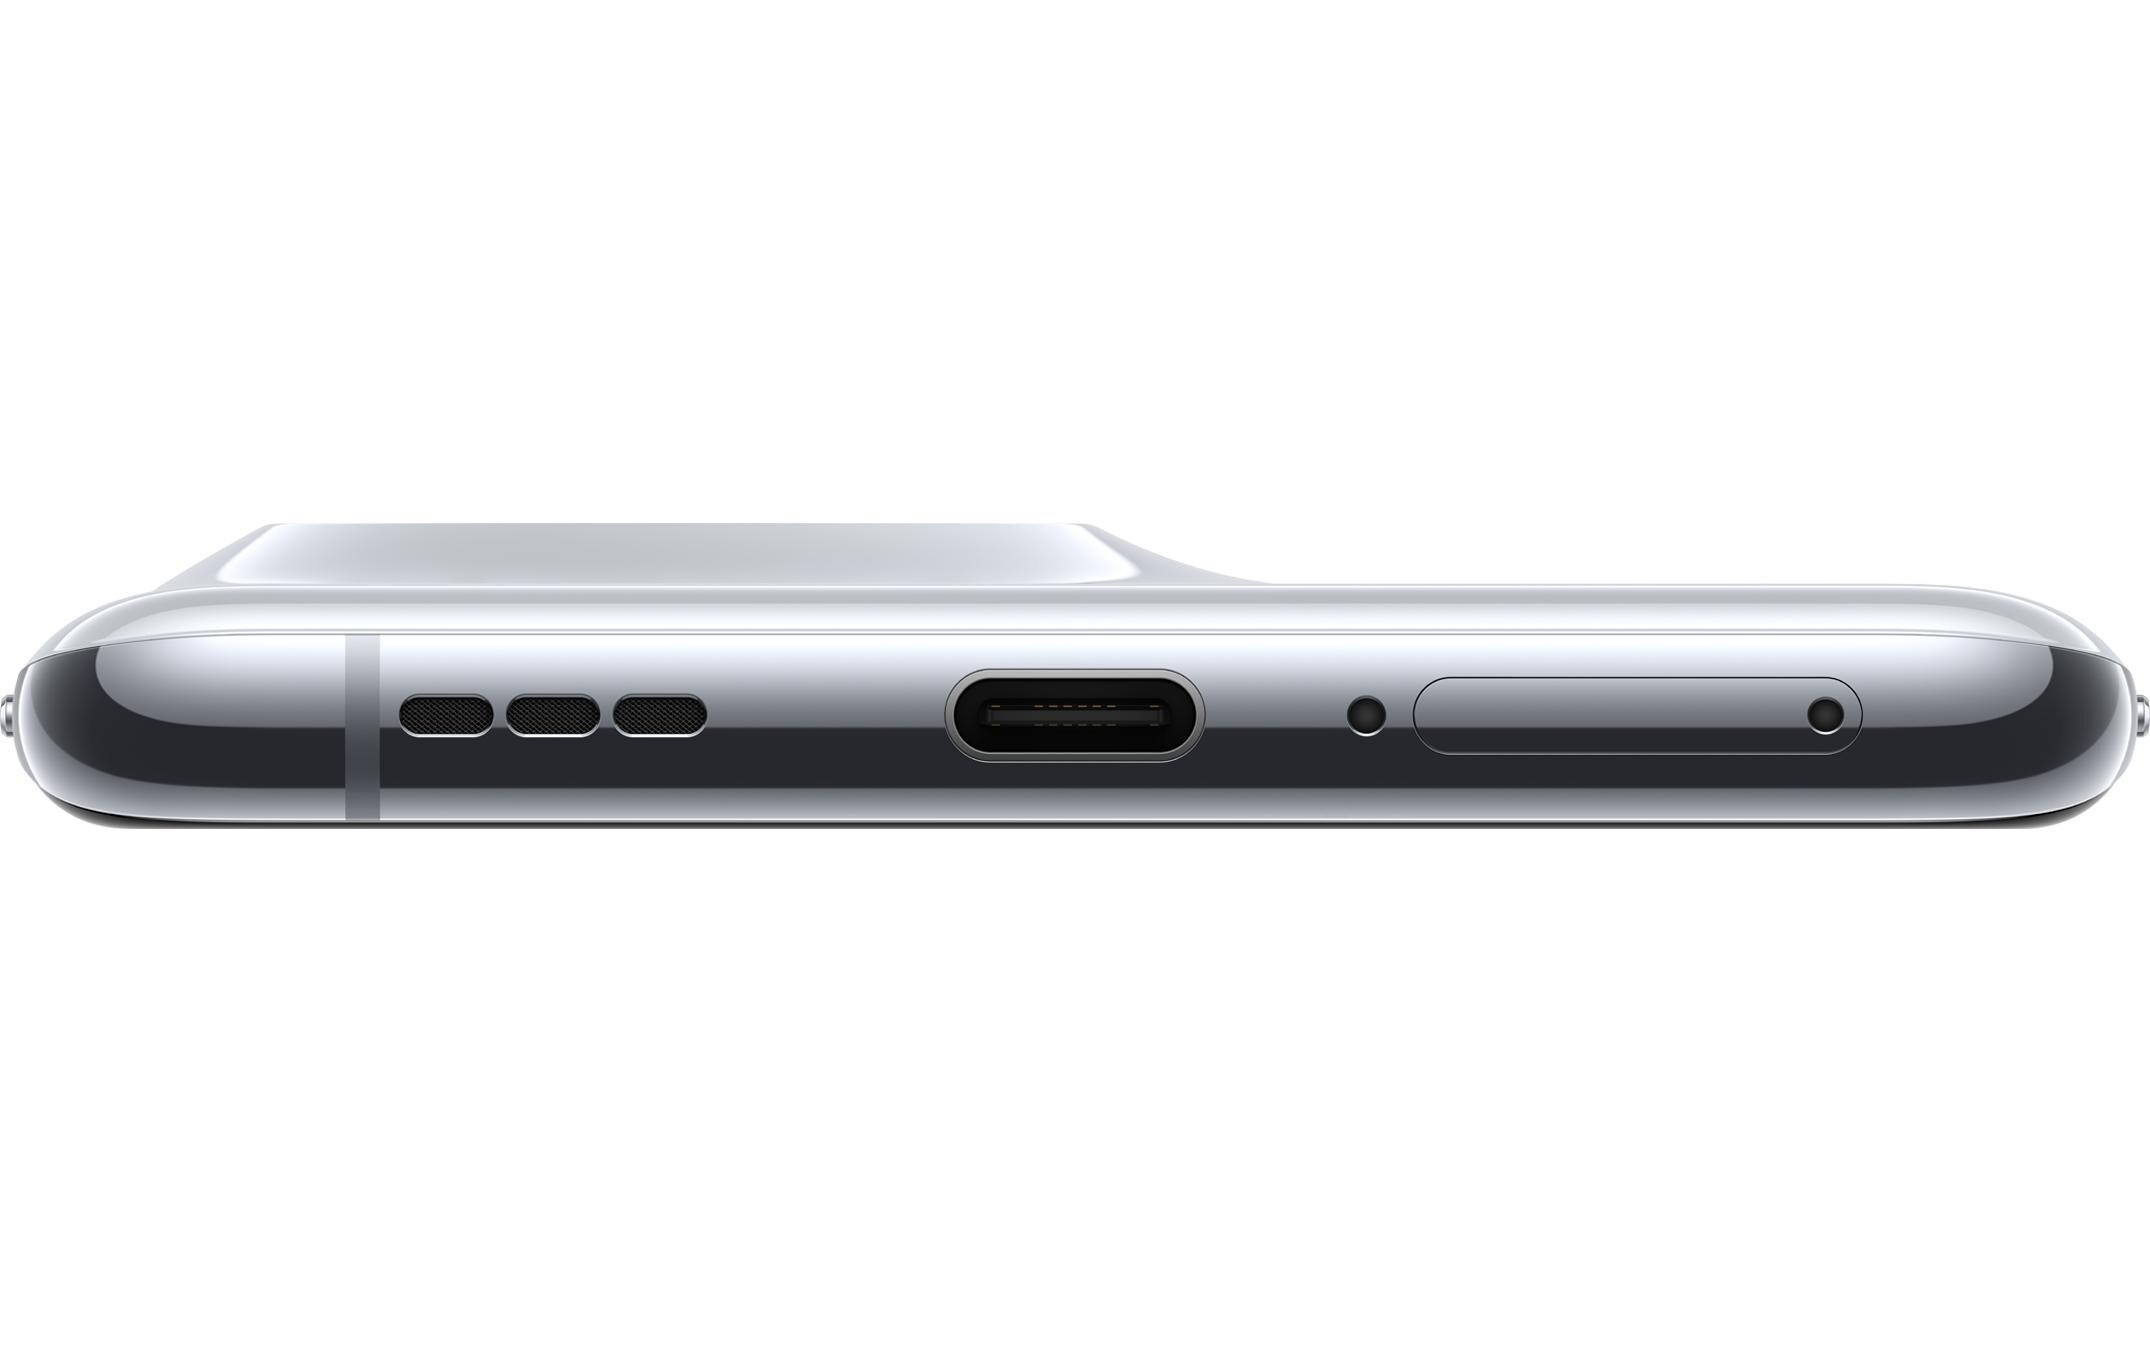 Oppo Smartphone »X5 Pro 256 GB Weiss«, White, 16,95 cm/6,7 Zoll, 256 GB Speicherplatz, 32 MP Kamera